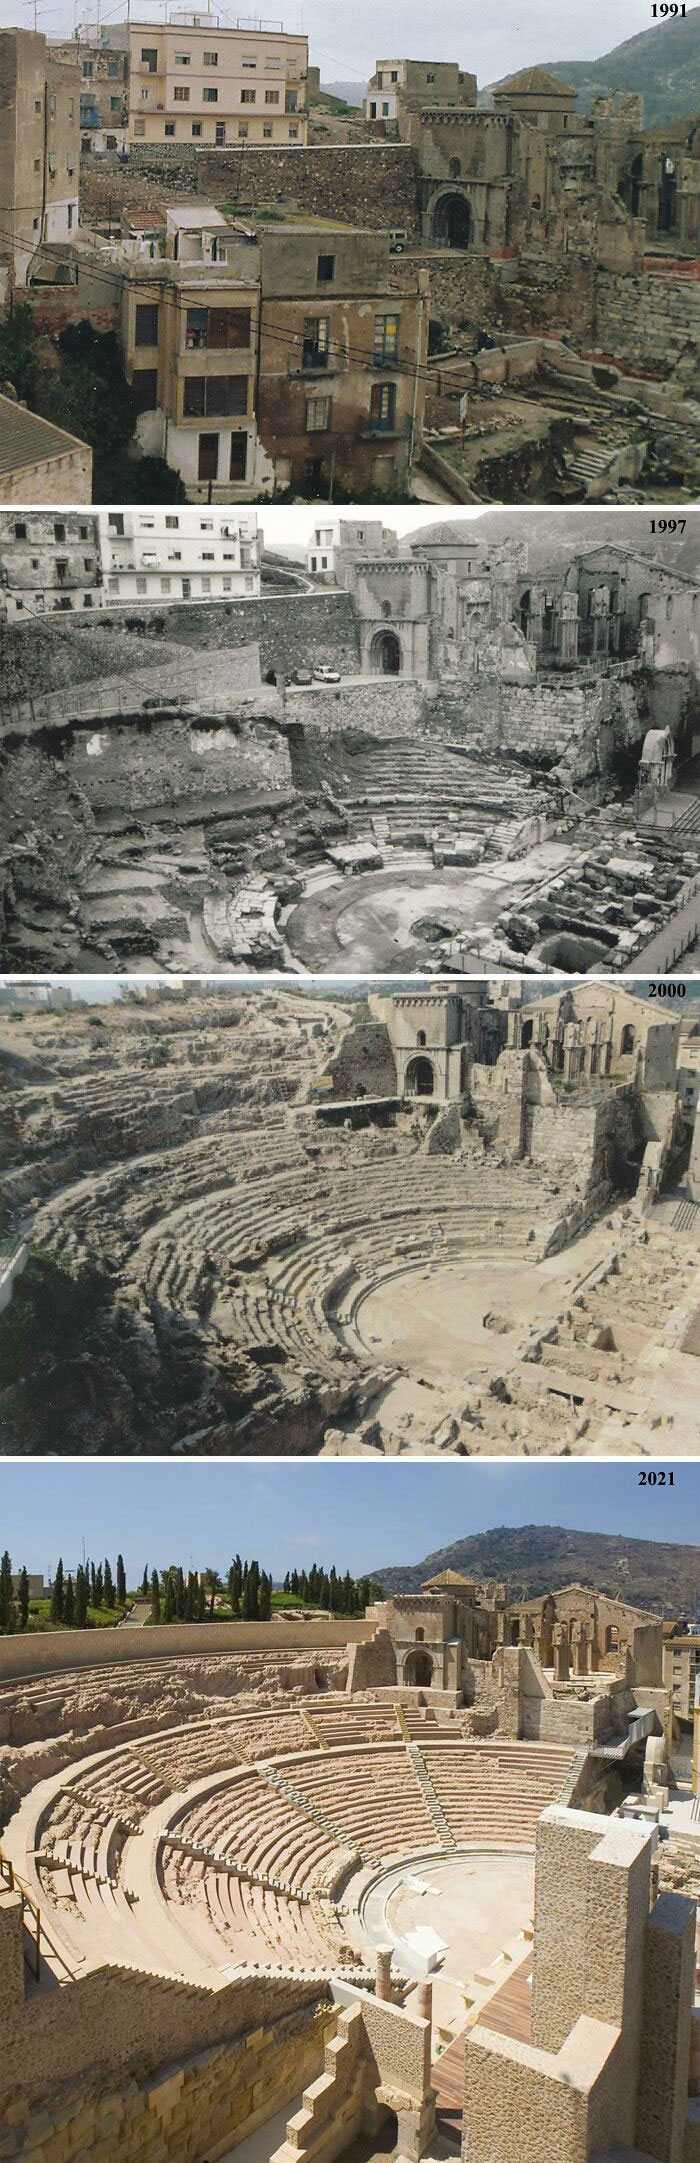 Roman Theatre Of Cartagena (Province Of Murcia, Spain) 1991 vs. 2021